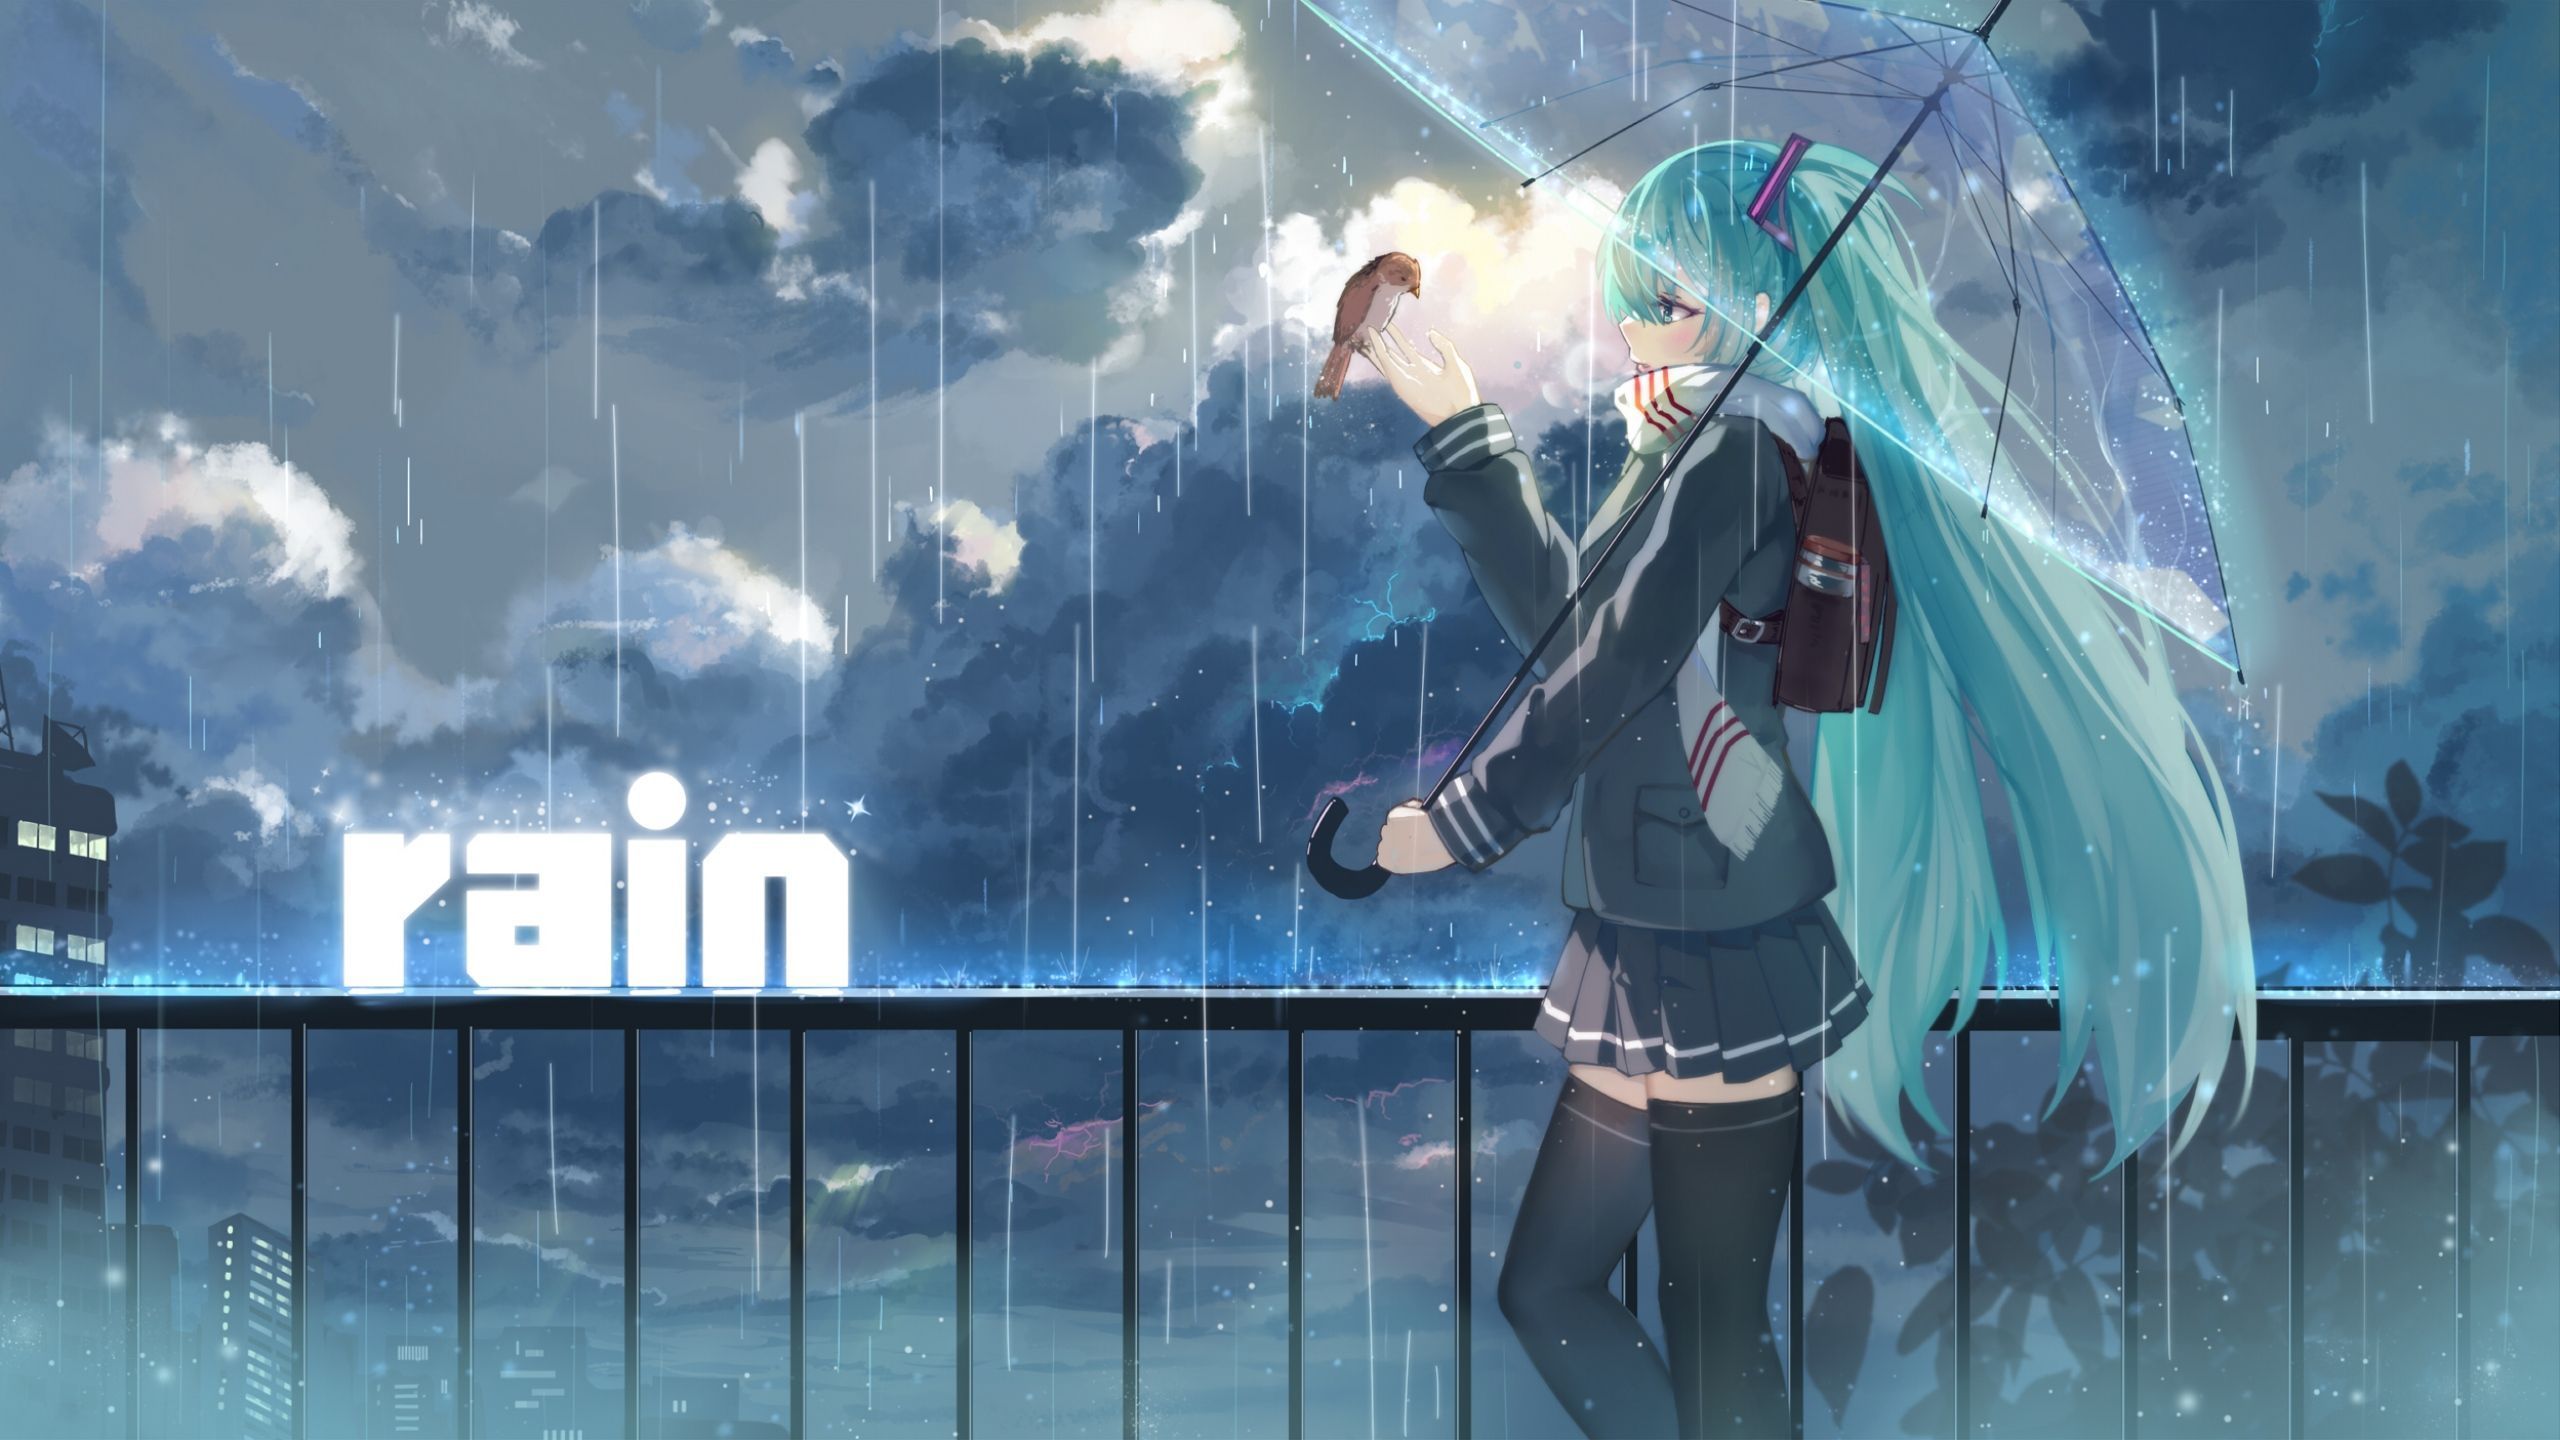 Aesthetic rain anime desktop wallpapers